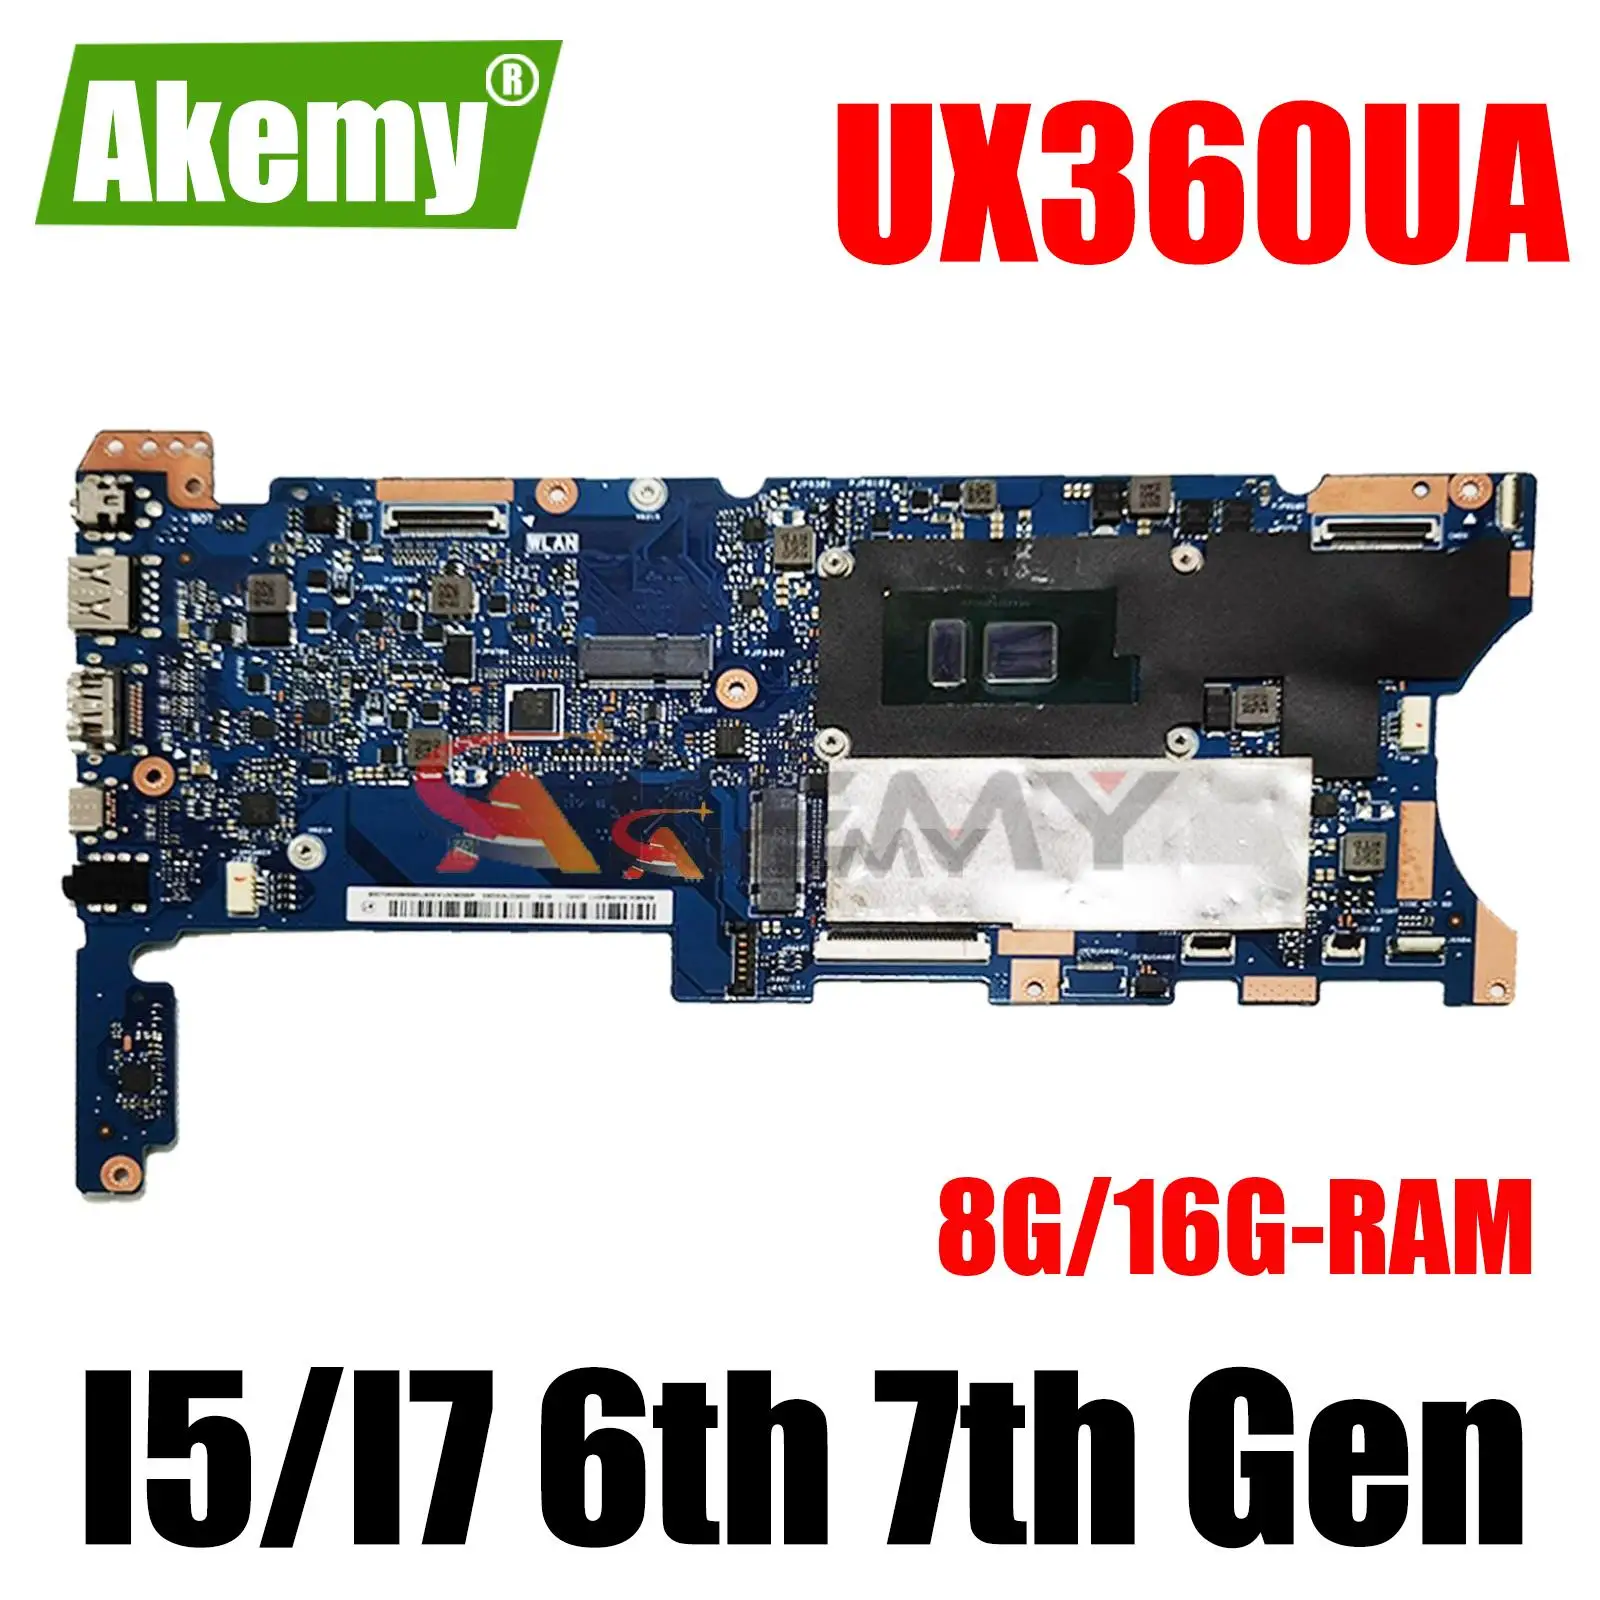 

UX360UA MAINboard For ASUS Zenbook Flip UX360UAK UX360U Notebook Motherboard With I5/I7 6th 7th GEN 8G/16G-RAM 100% Test